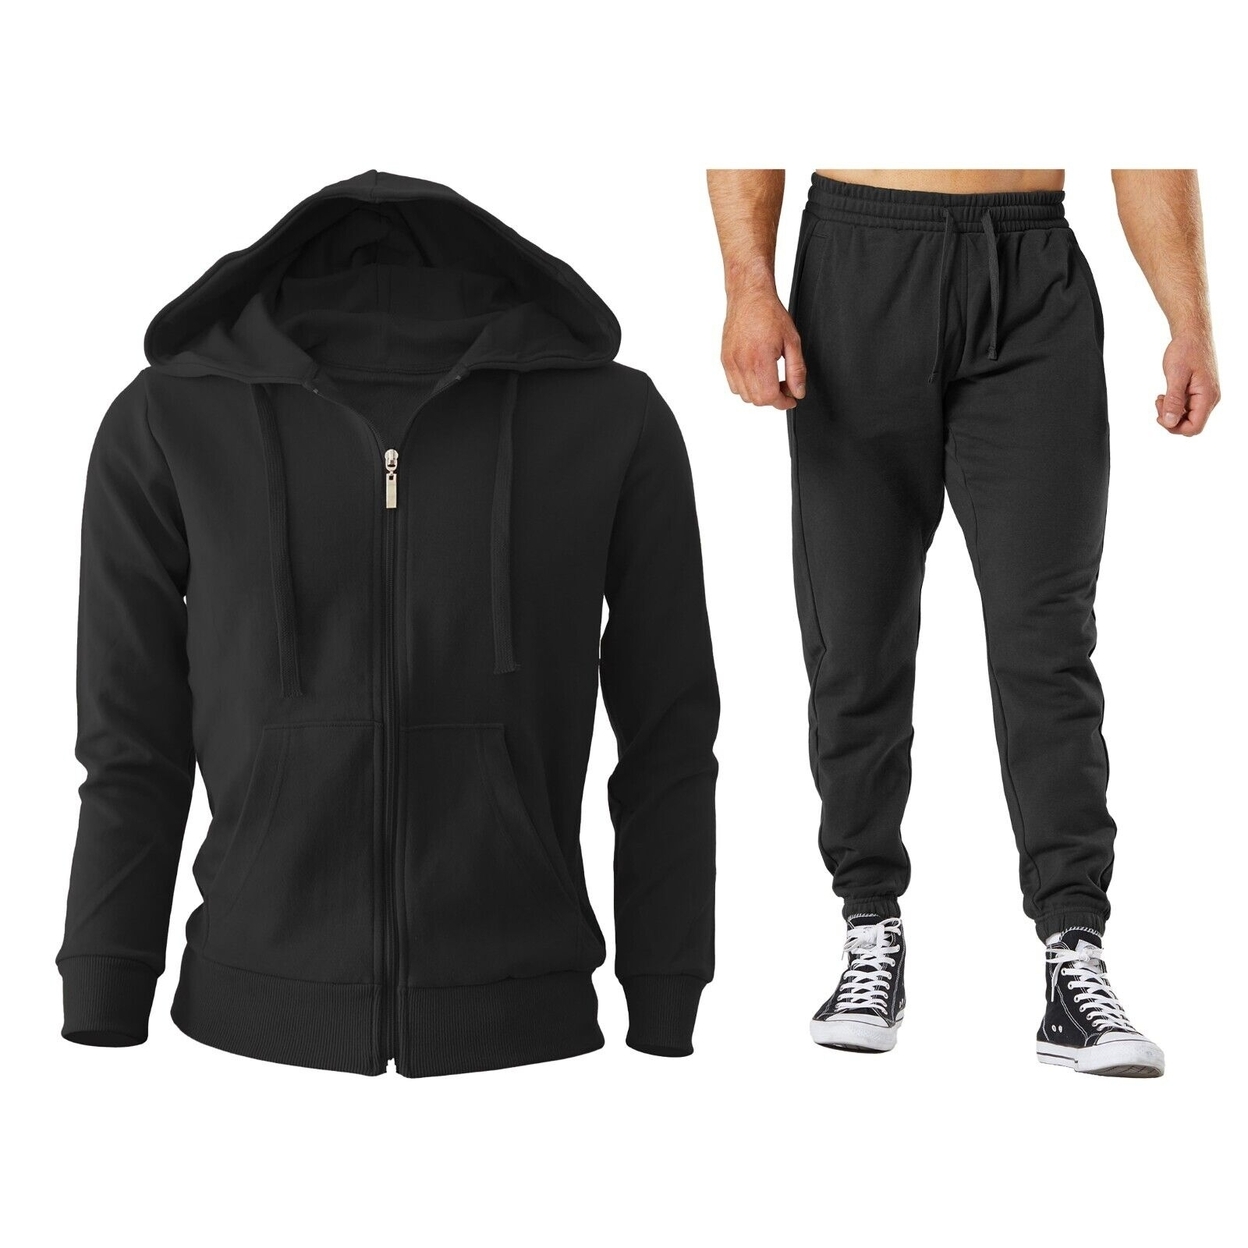 2/4-Piece: Men's Winter Warm Cozy Athletic Multi-Pockets BIG & TALL Sweatsuit Set - Black, 2, 3xl